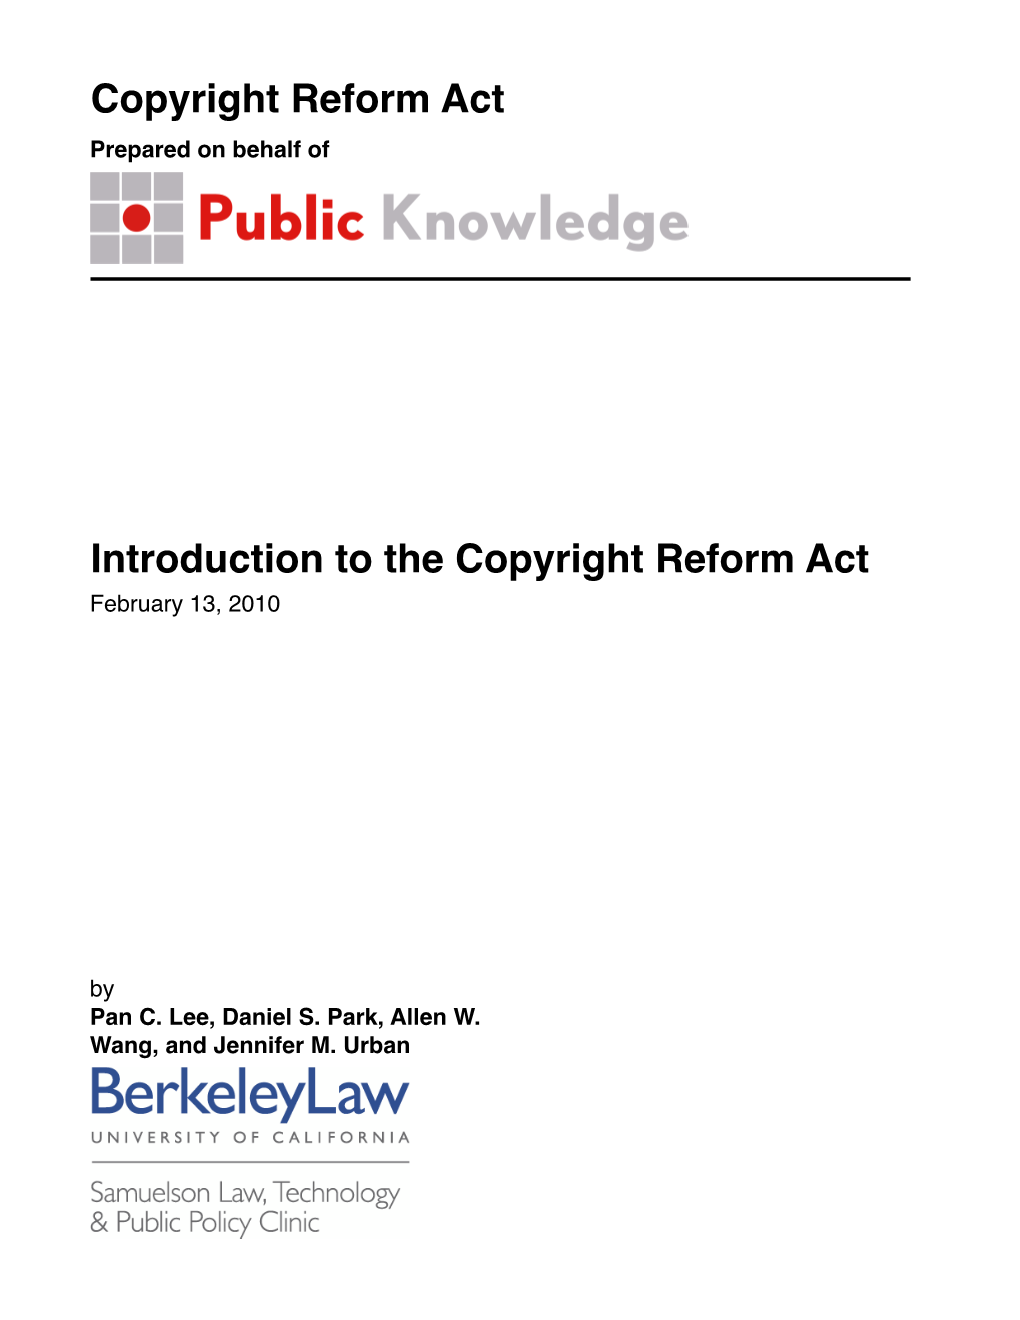 Copyright Reform Act Prepared on Behalf Of